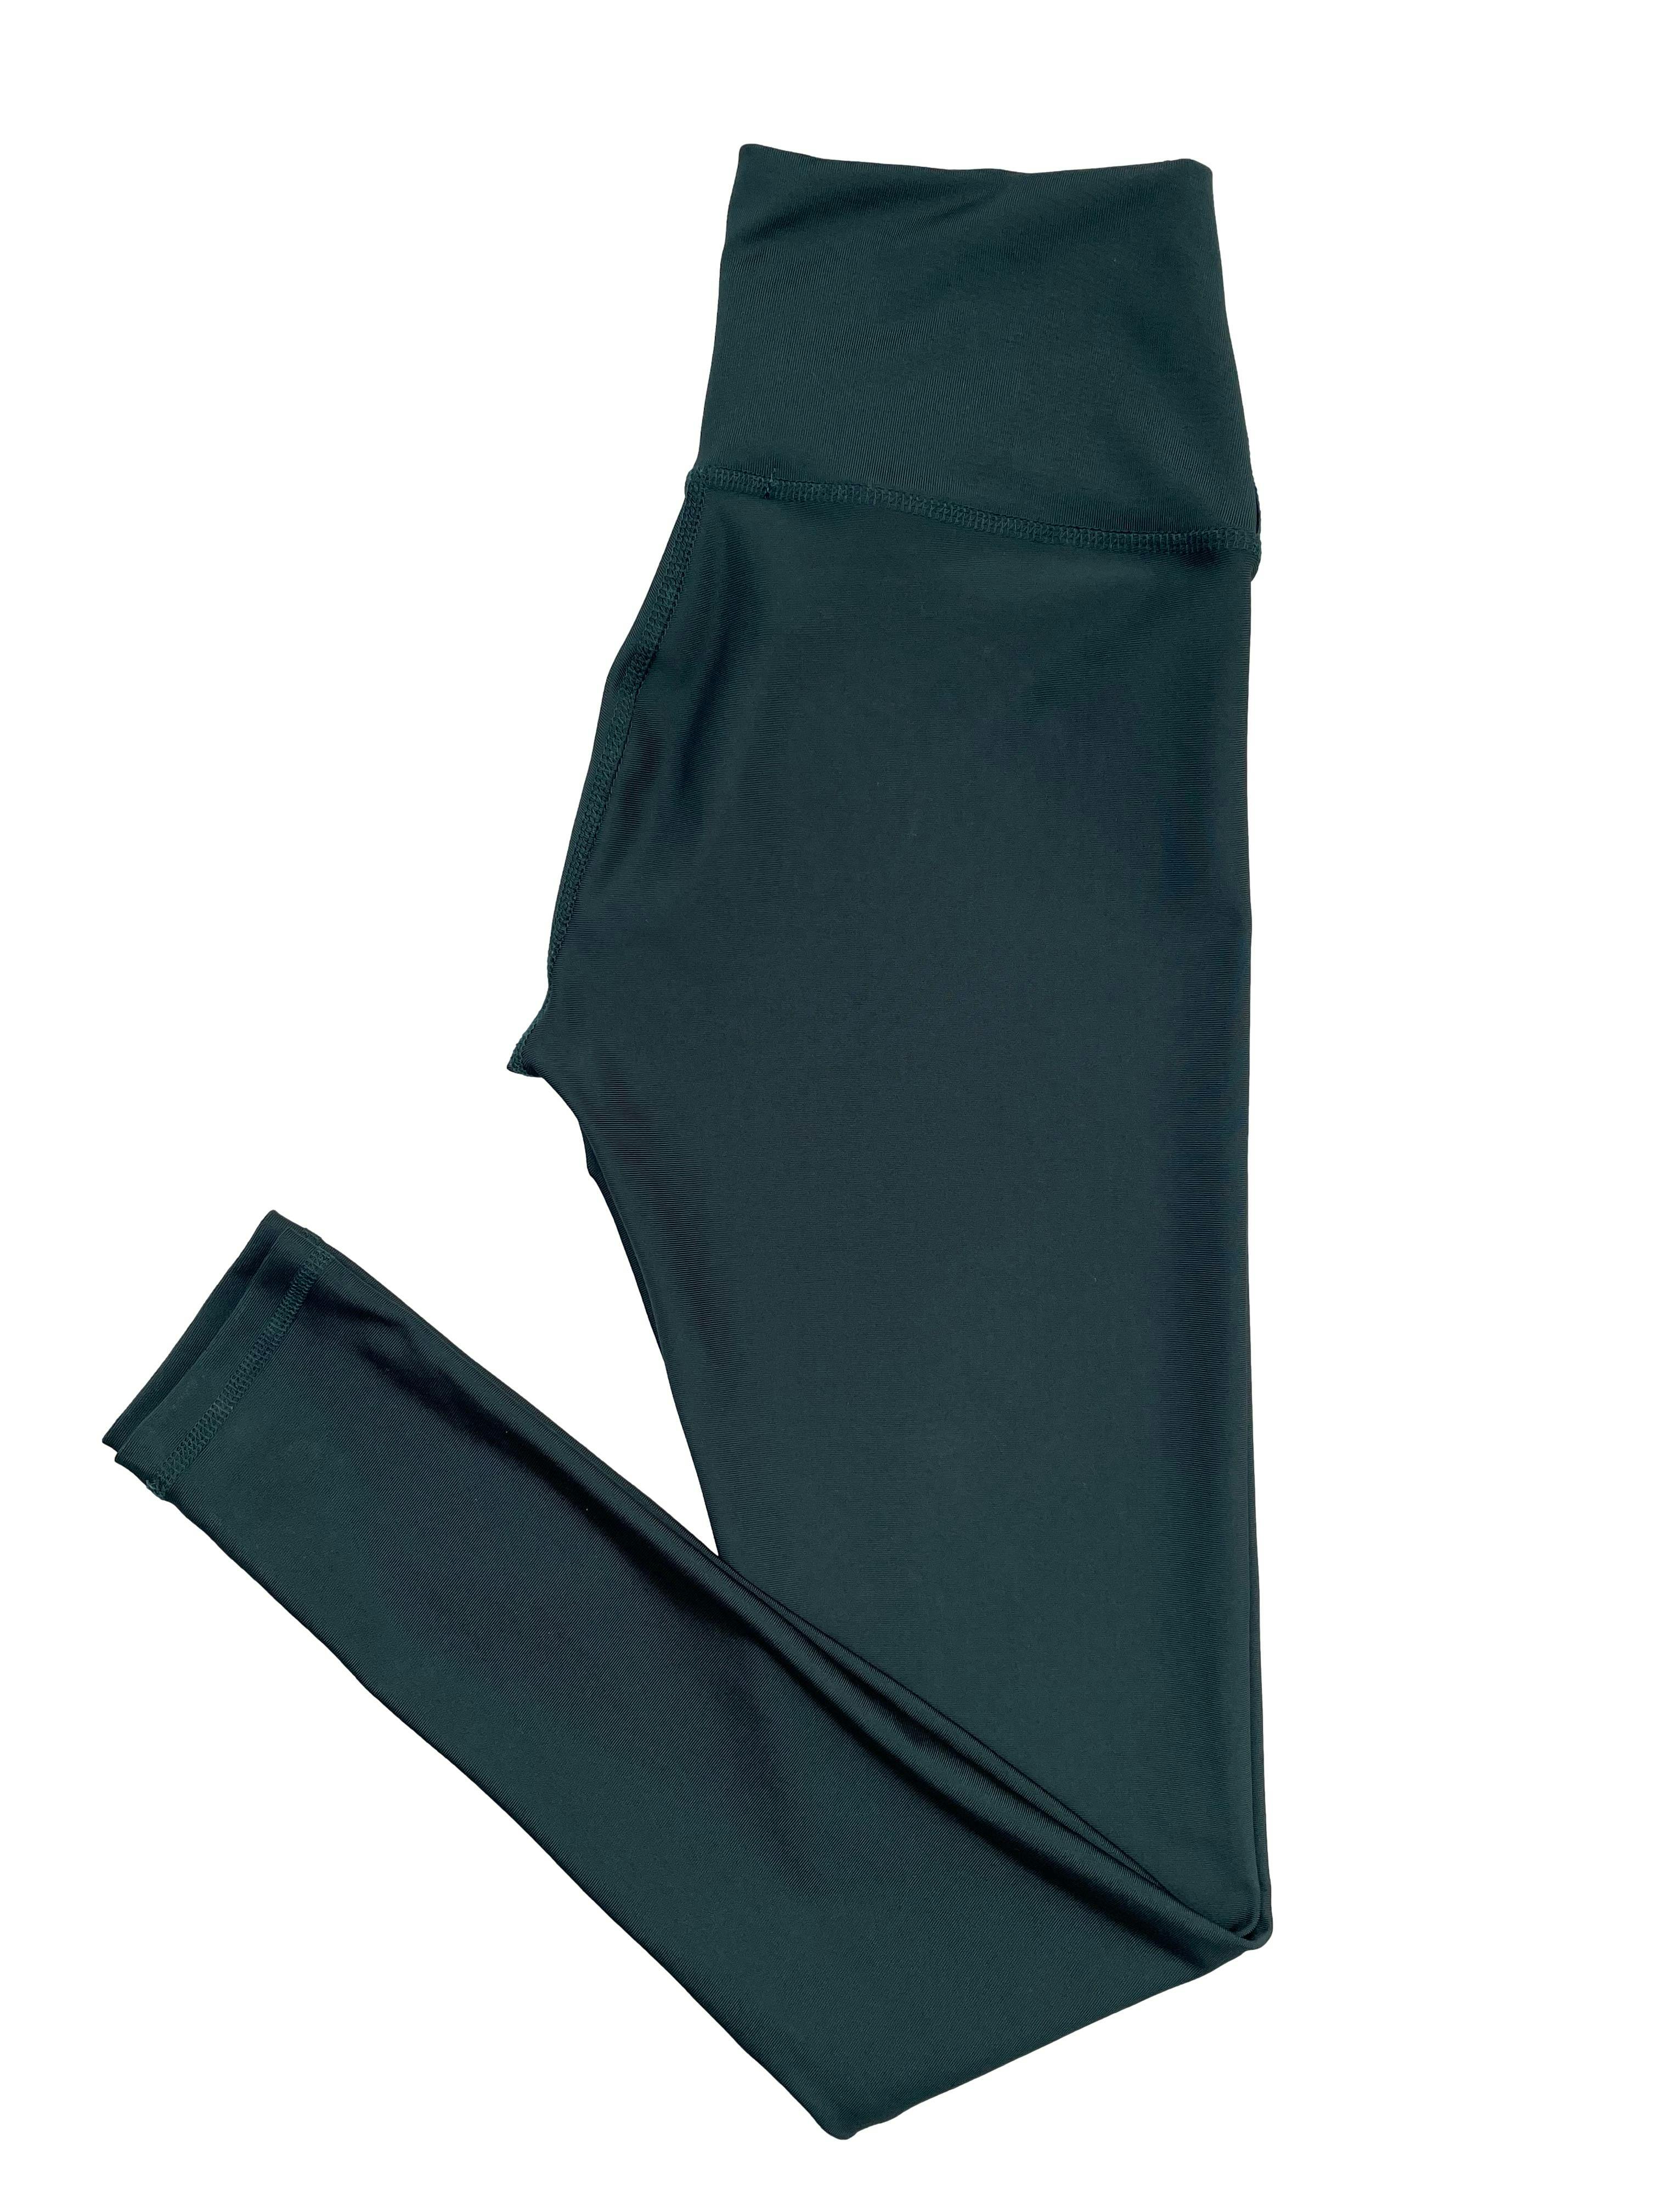 Leggings color verde con pretina ancha. Cintura 58cm sin estirar, Tiro 25cm, Largo 88cm.